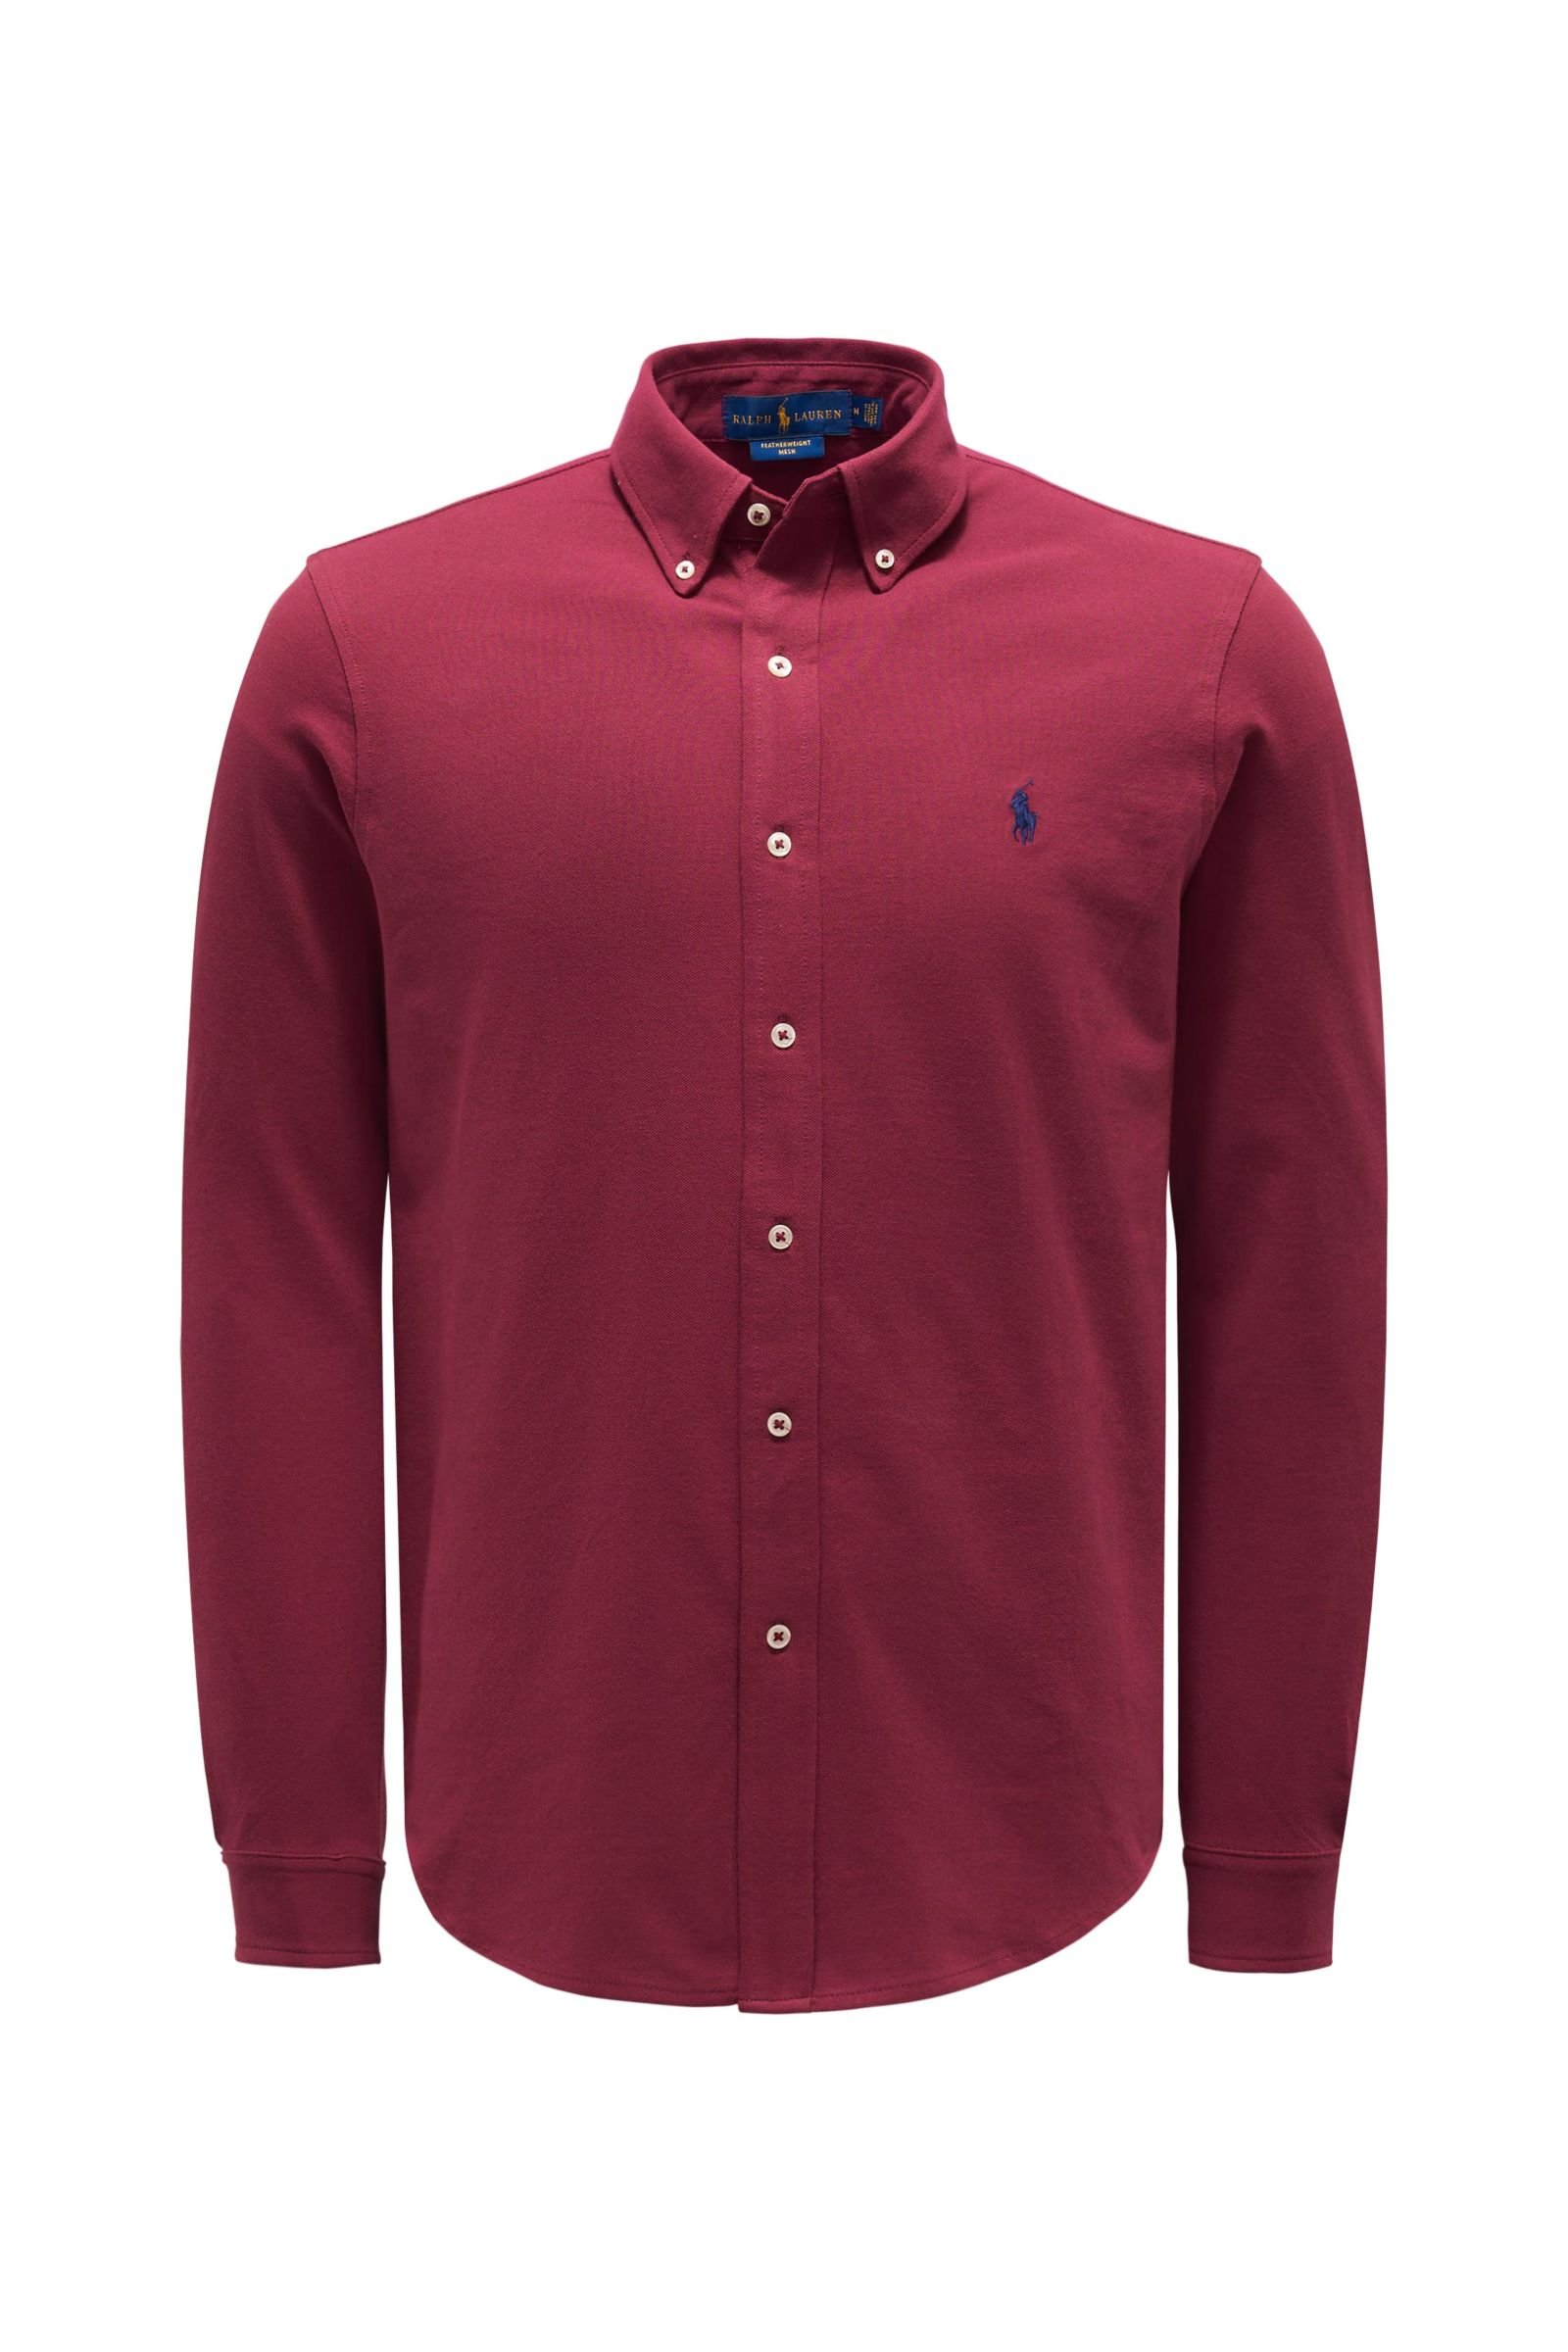 Jersey shirt button-down collar burgundy